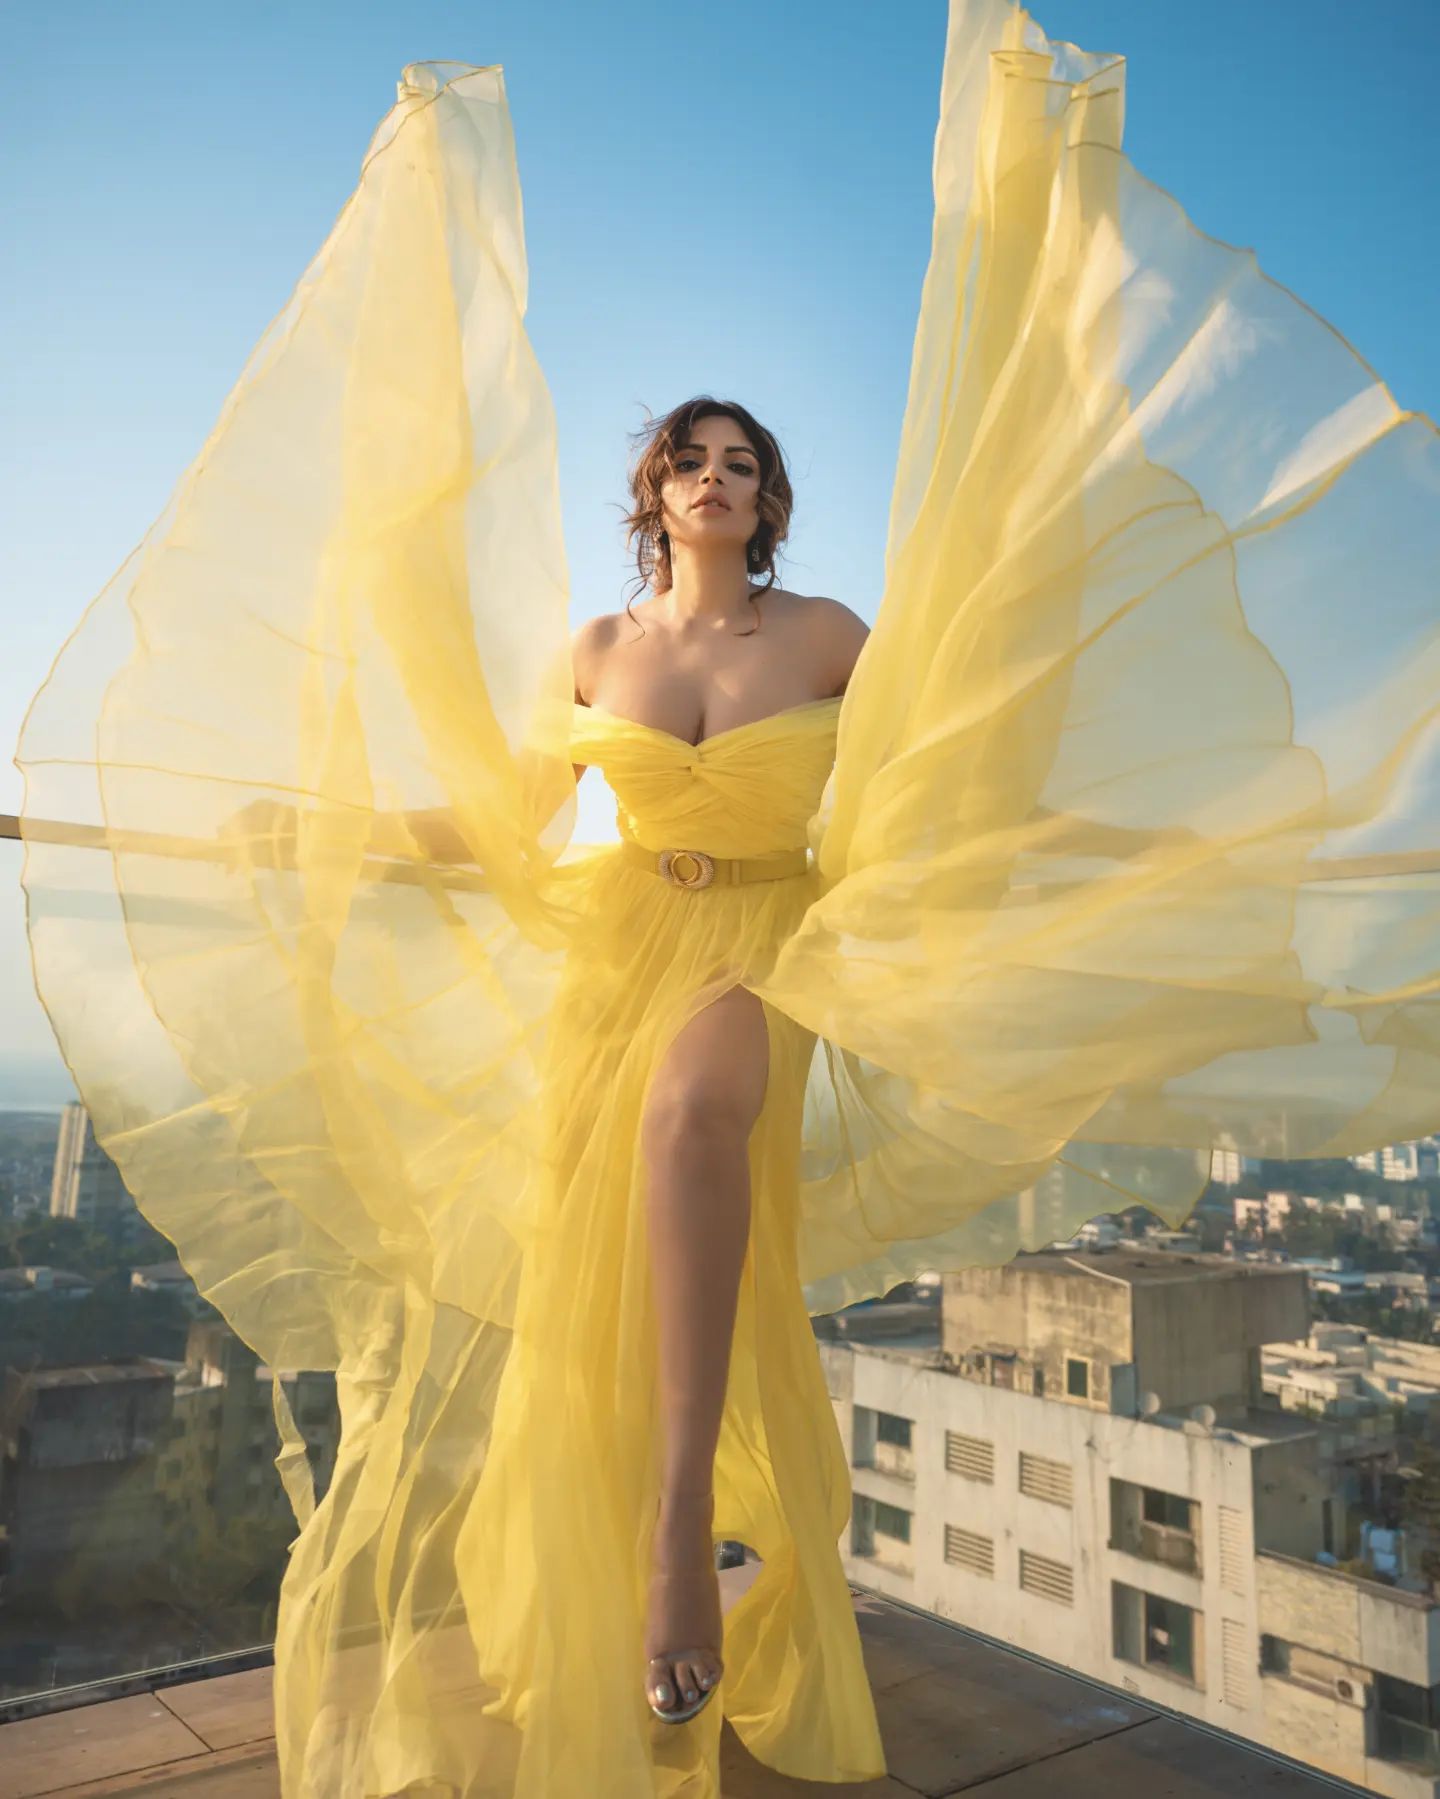 Shama Shikandar looks glamorous in yellow